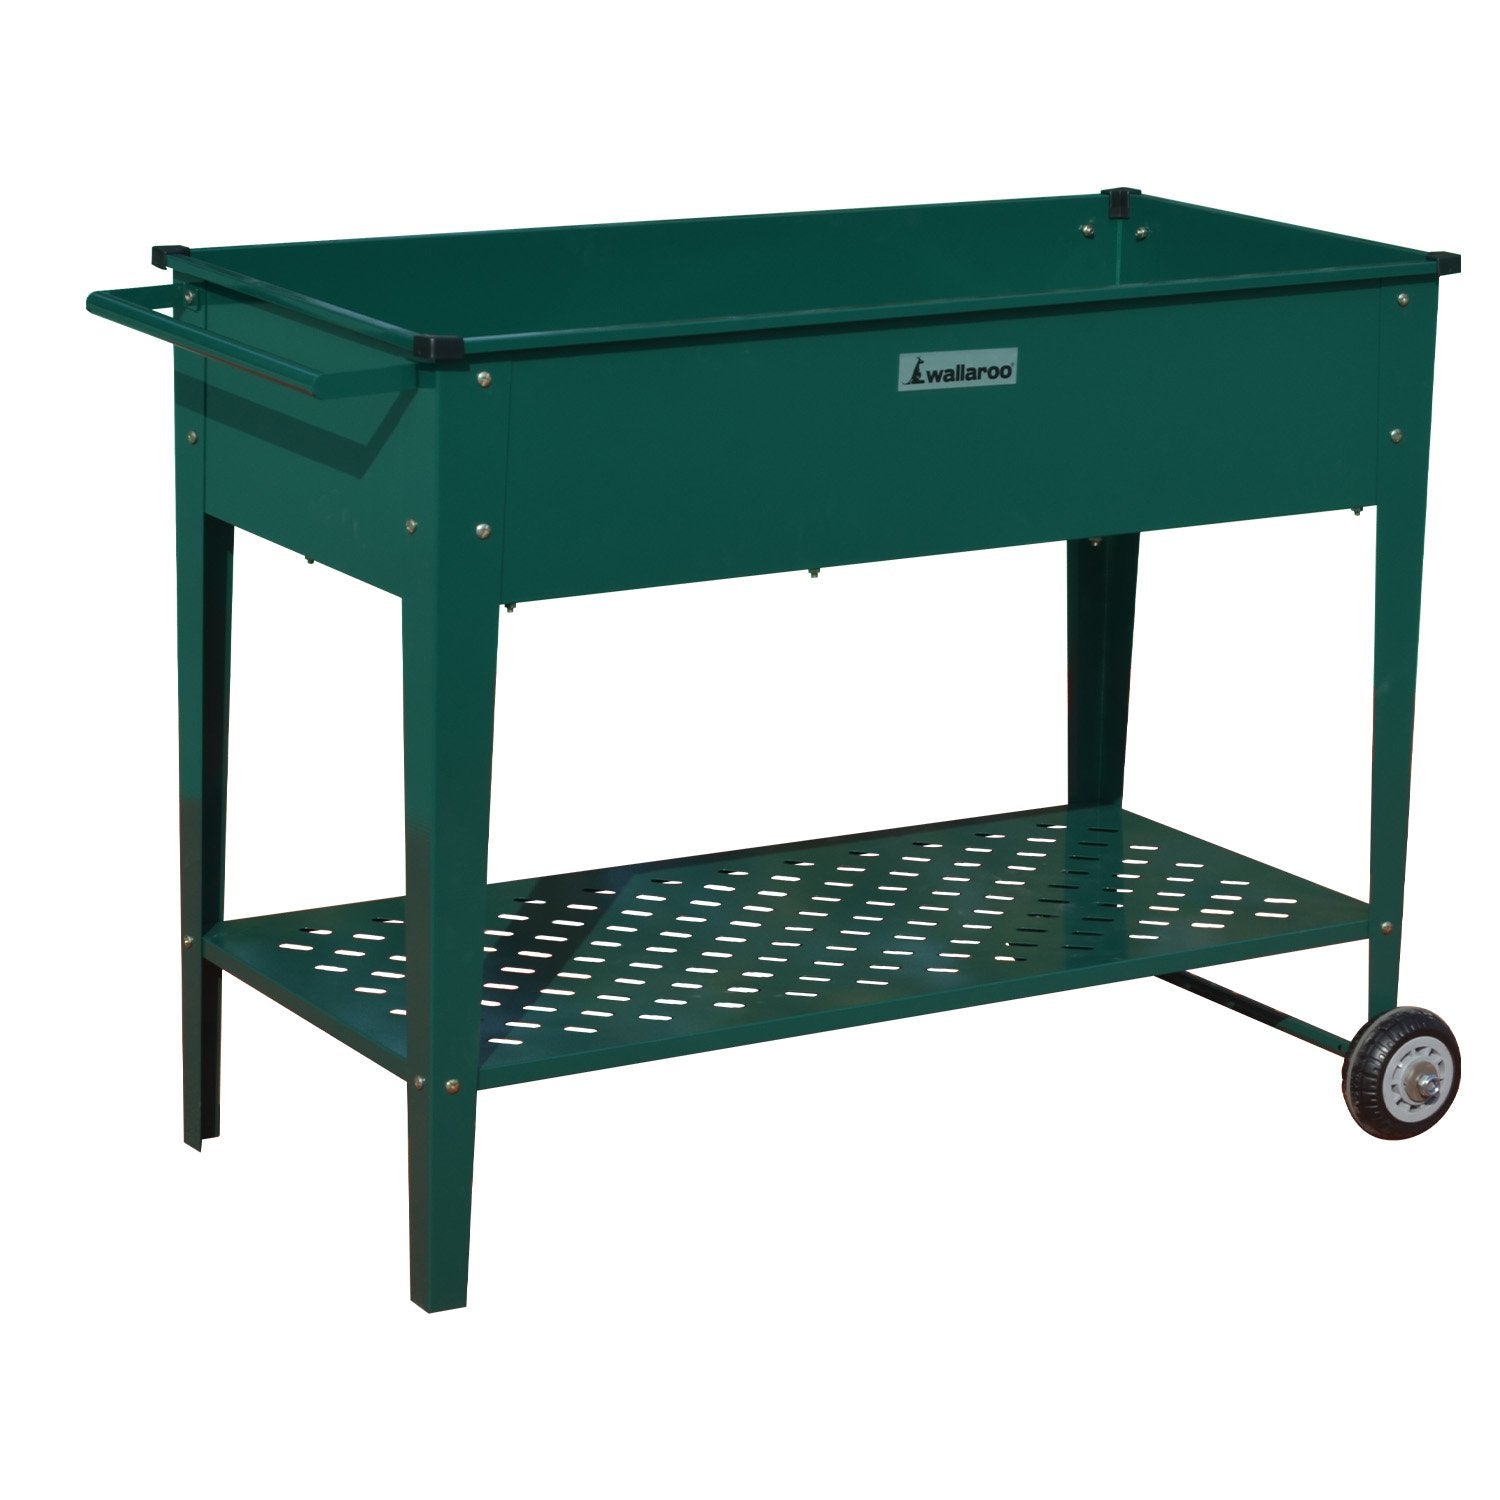 Wallaroo Garden Bed Cart Raised Planter Box Galvanized Steel - Green 108.5 x 50.5 x 80cm